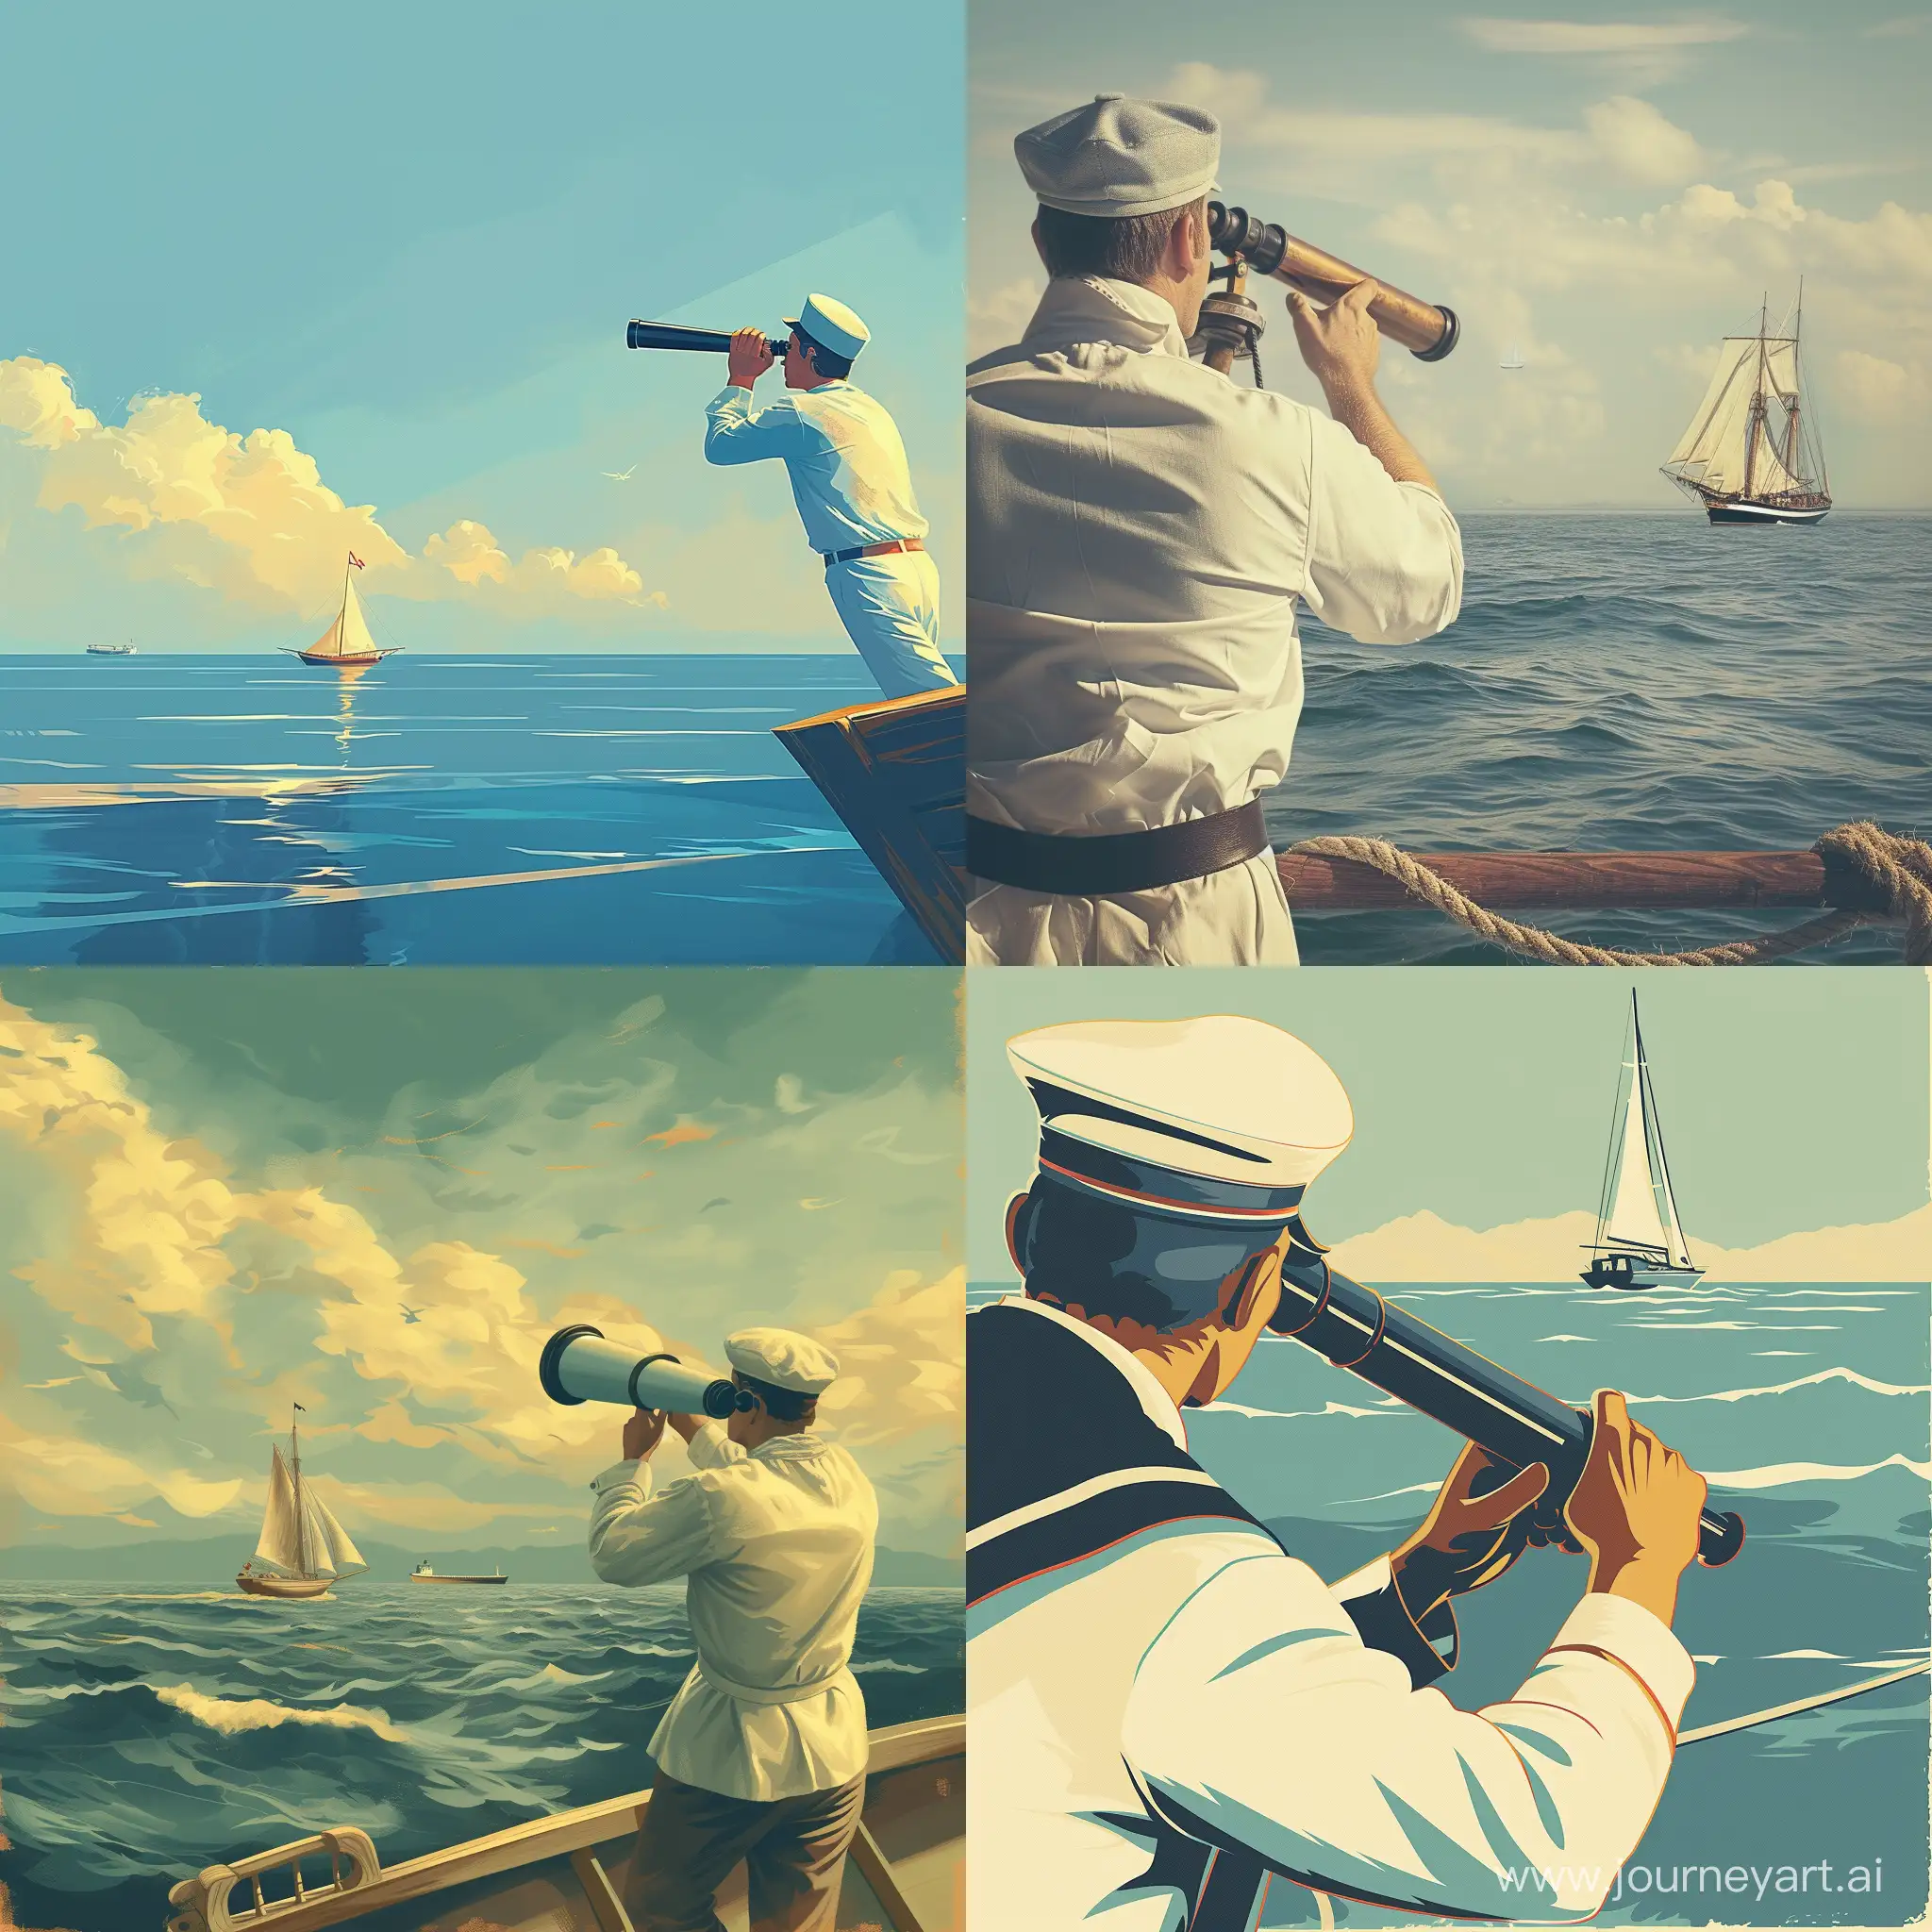 Sailor-Using-Spyglass-to-Observe-Boat-on-Horizon